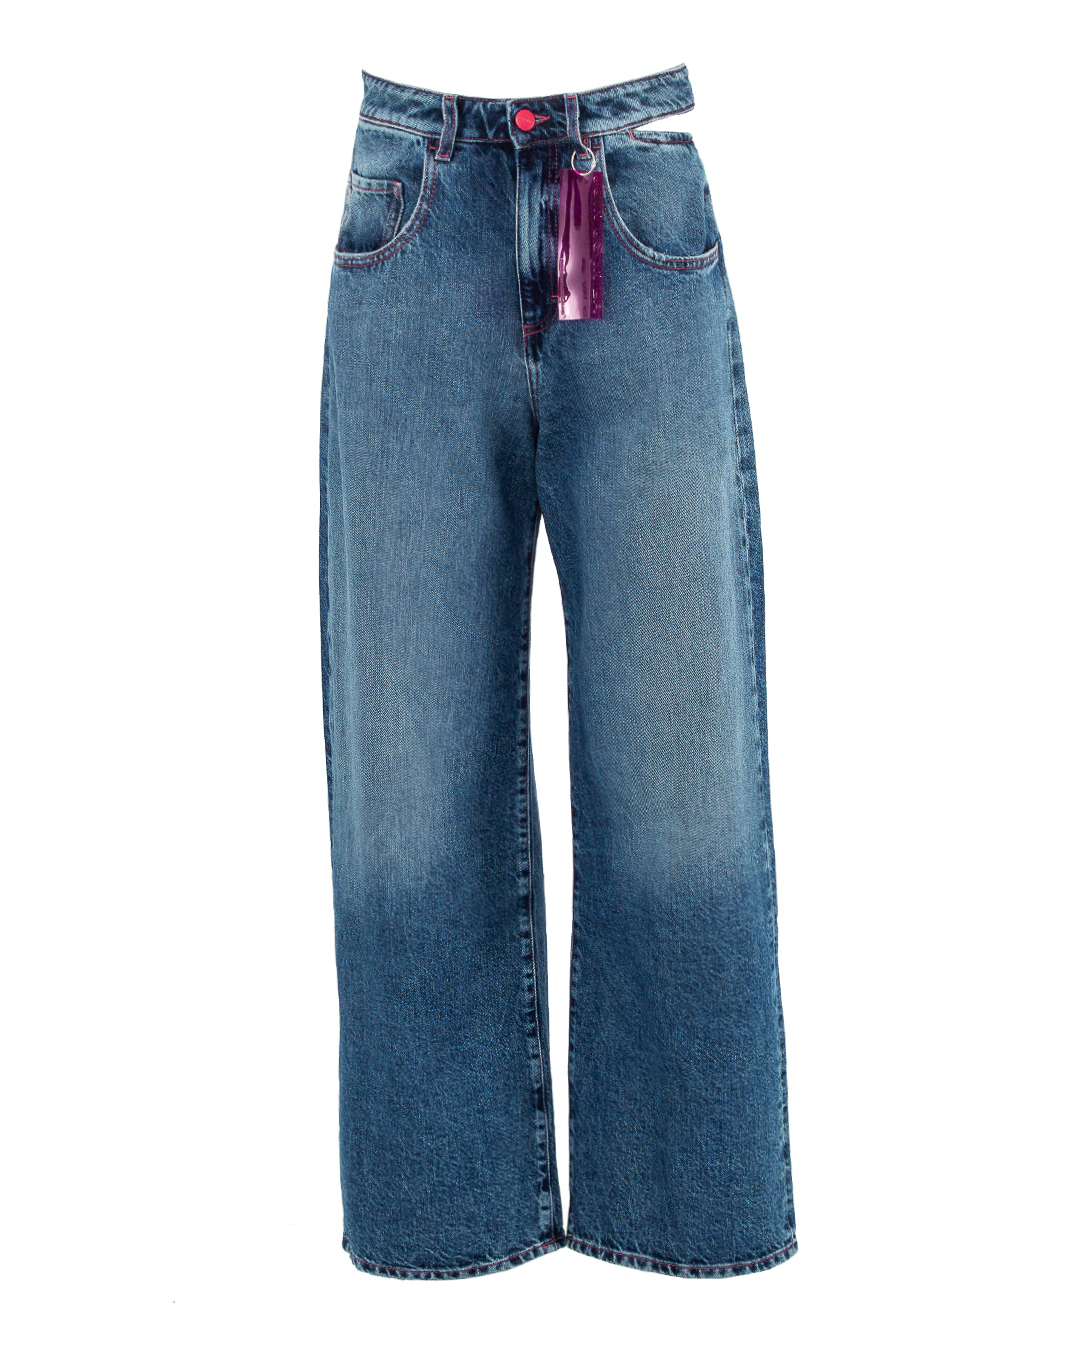 джинсы ICON DENIM POPPY YID737 синий 29, размер 29 - фото 1